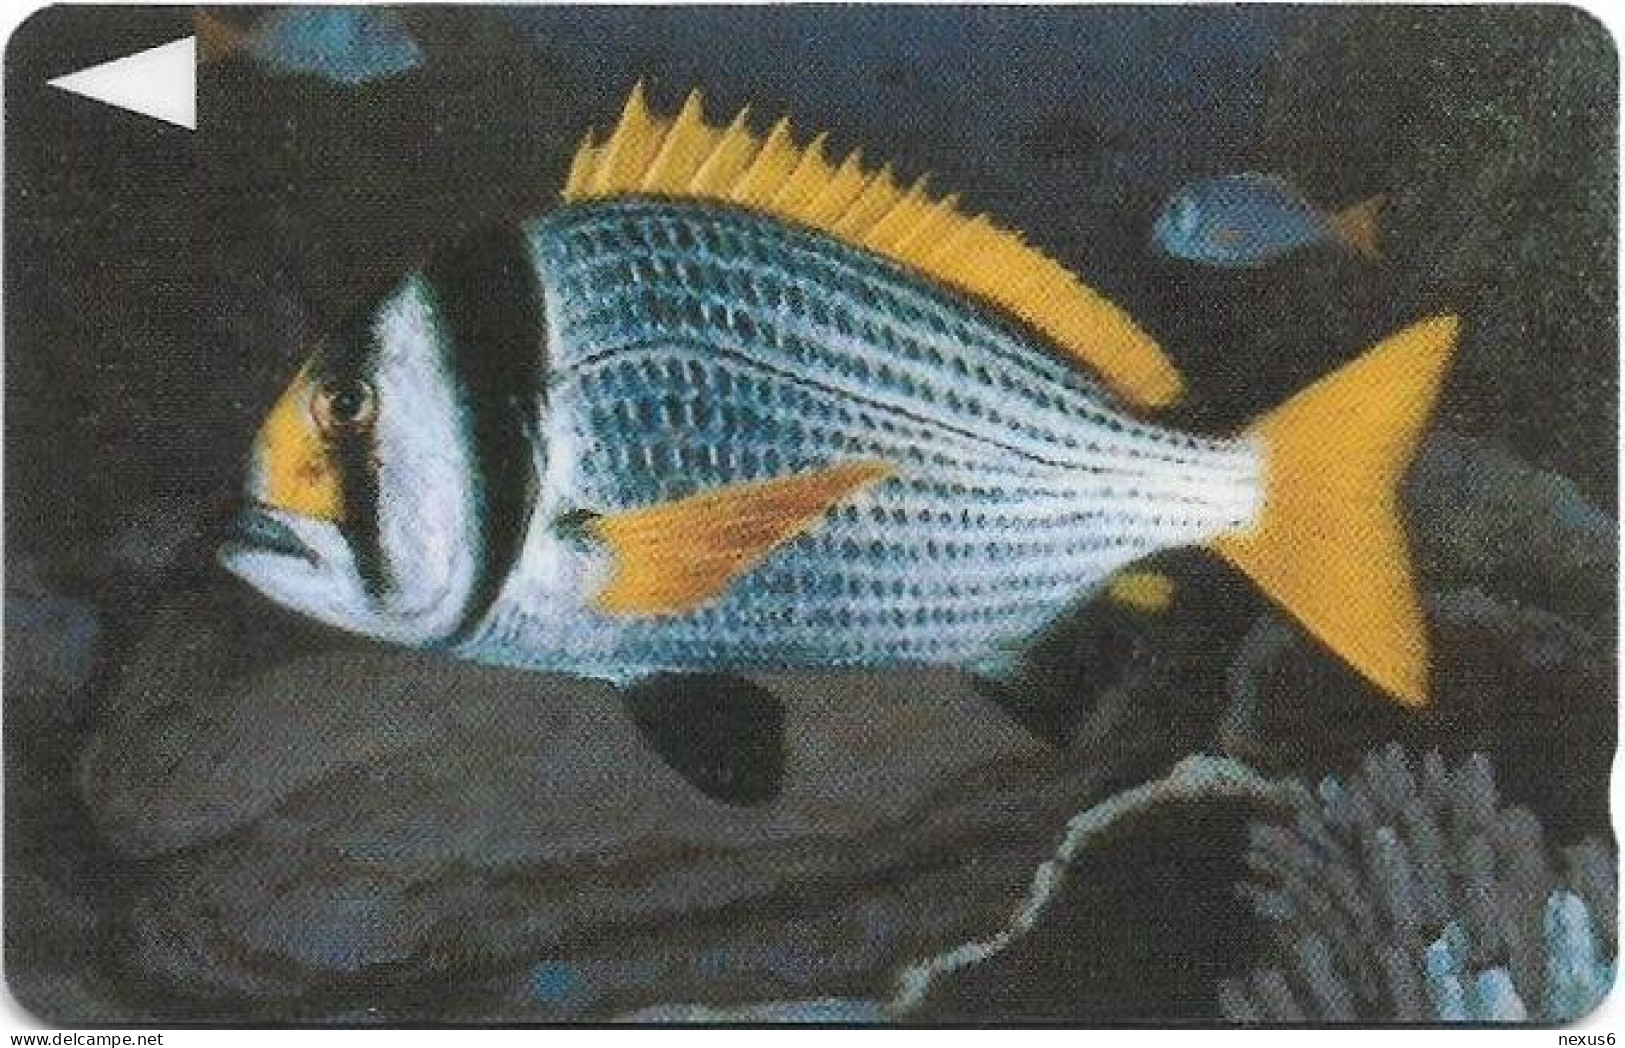 Bahrain - Batelco (GPT) - Fish Of Bahrain - Doublebar Bream - 39BAHT (Normal 0, Round Top ''3''), 1996, 200U, Used - Bahrain